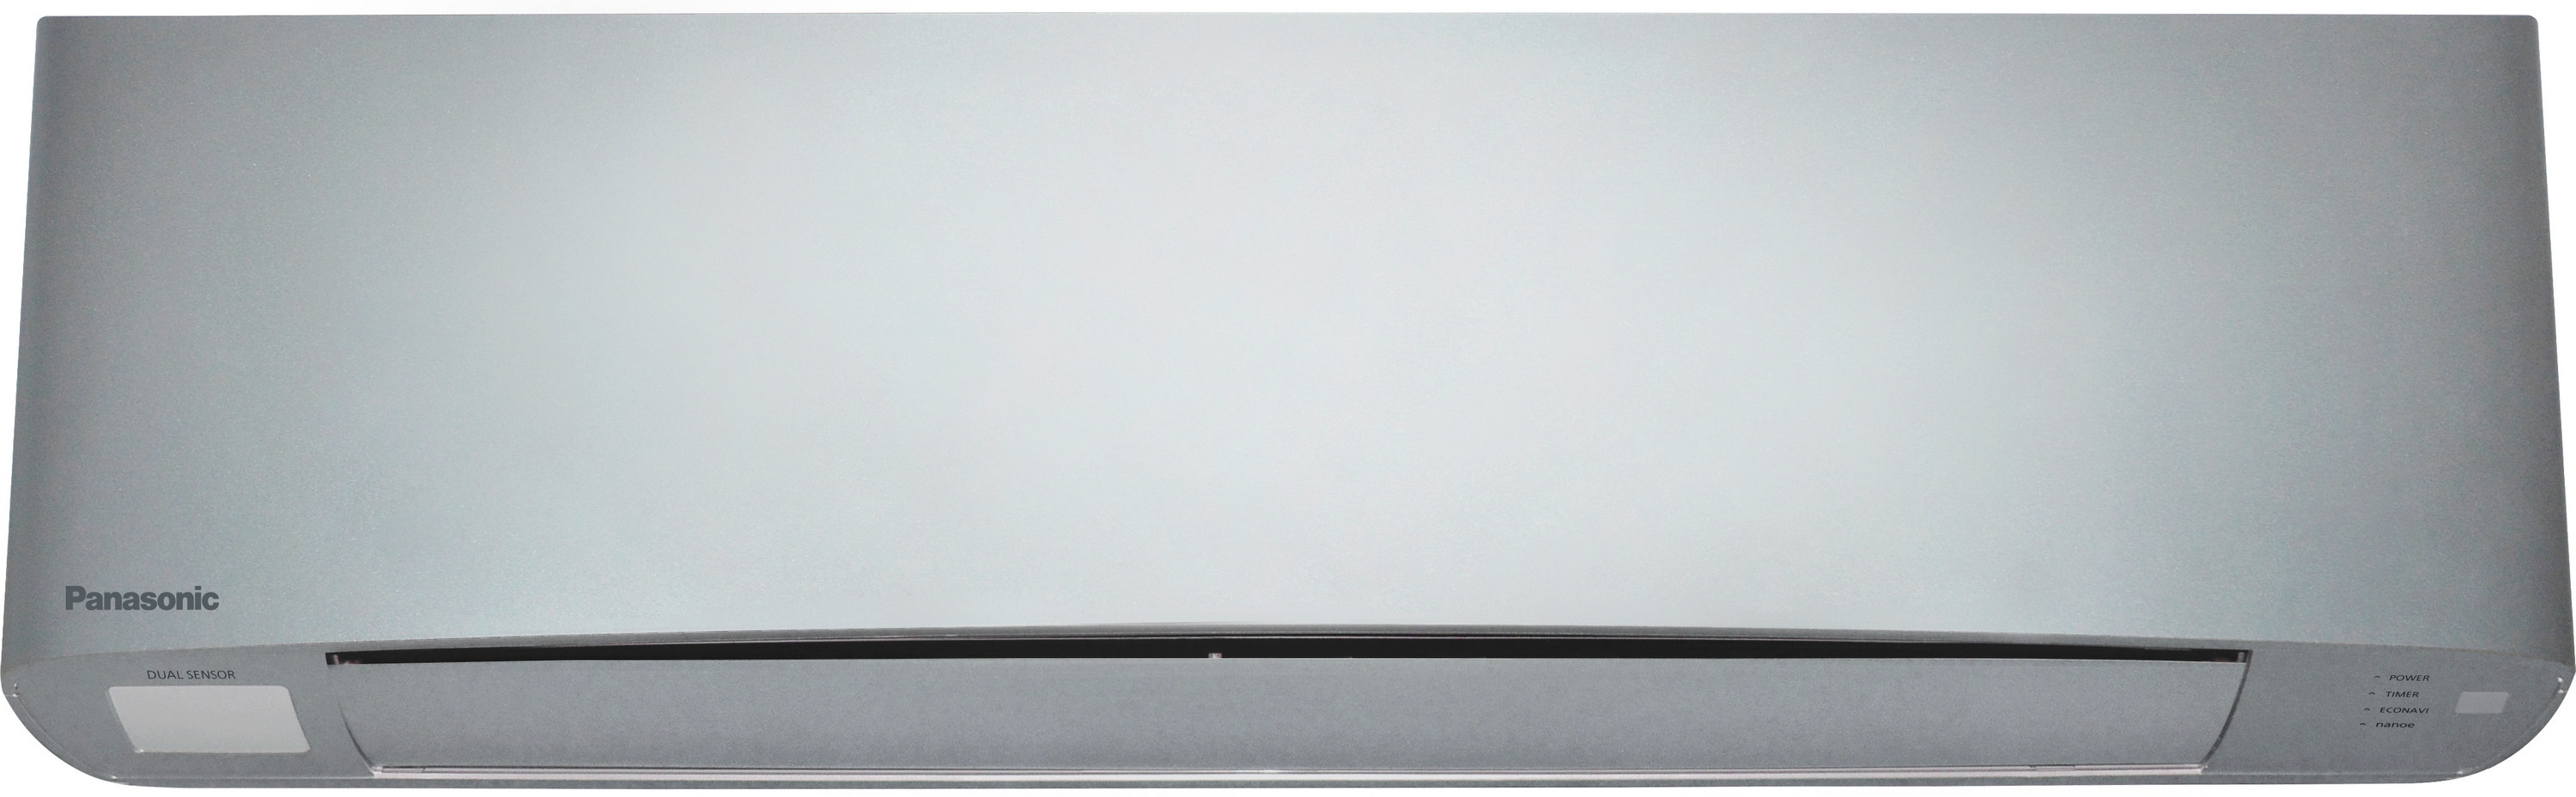 Внутренний блок мультисплит-системы Panasonic Flagship Silver CS-XZ35TKEW цена 44999.00 грн - фотография 2